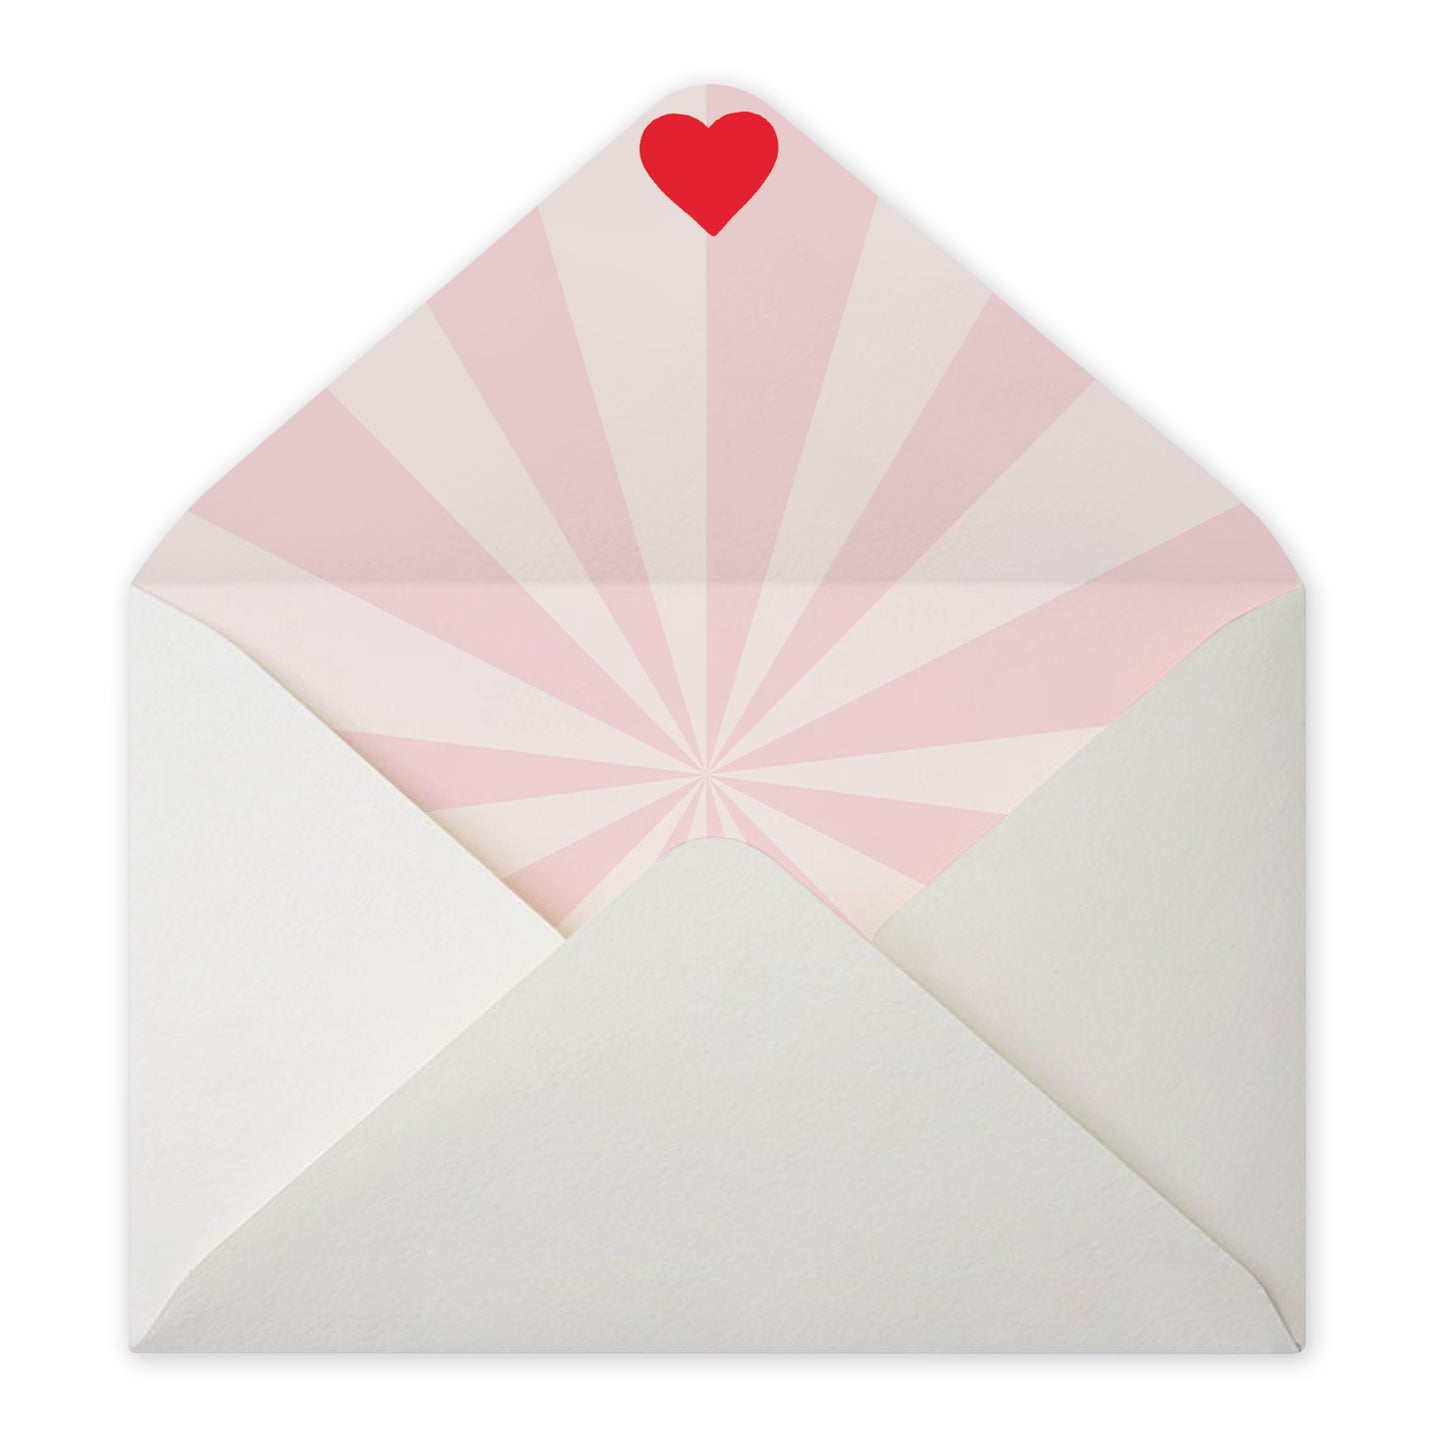 Cute Pop Up Card - Love You Longer - For Men Women